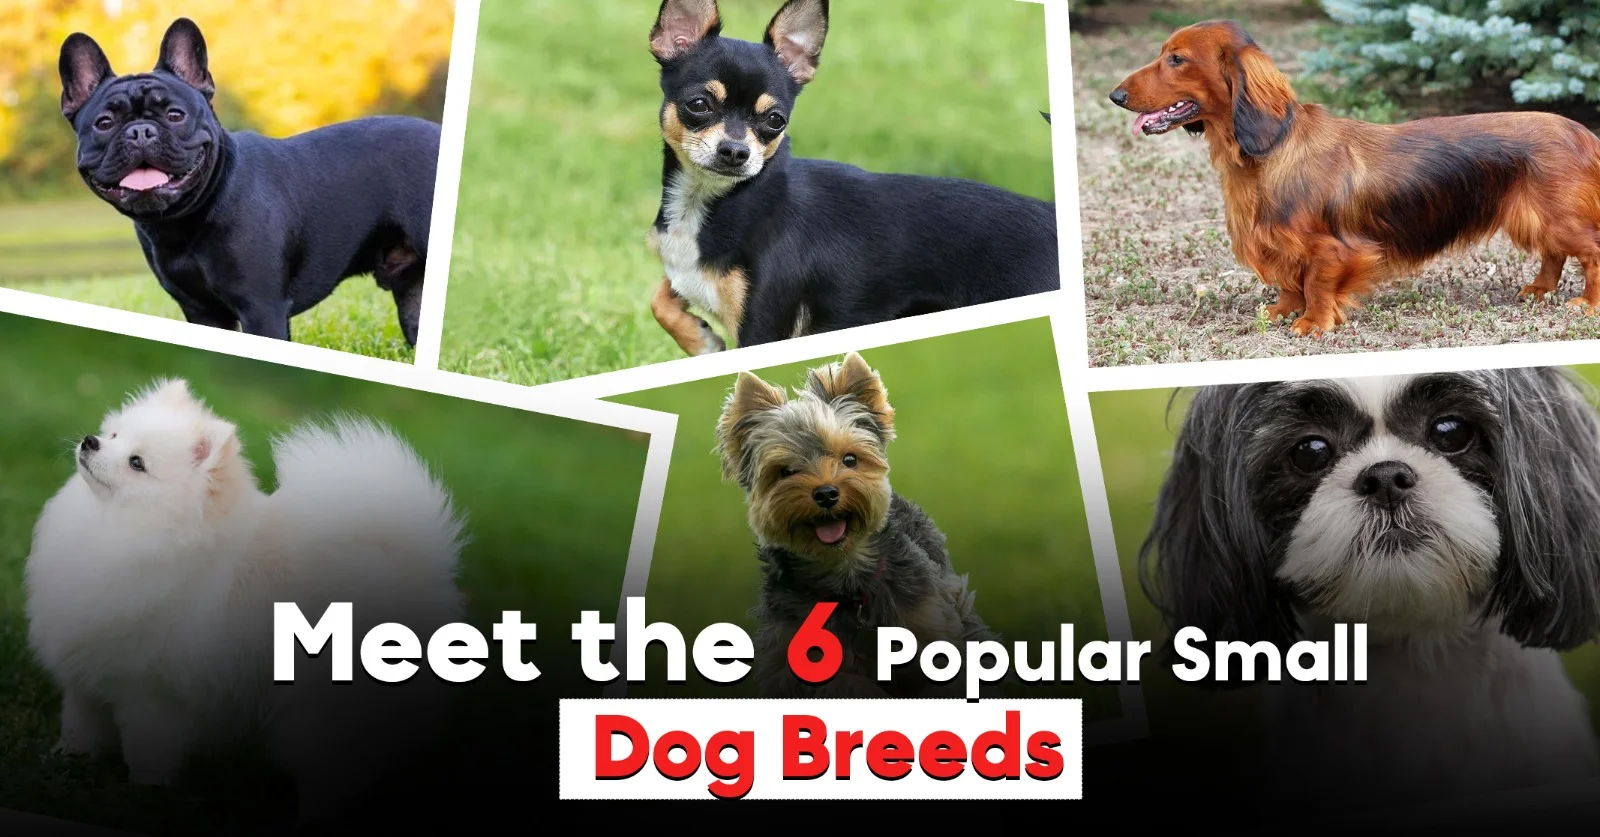 Meet the 6 Popular Small Dog Breeds